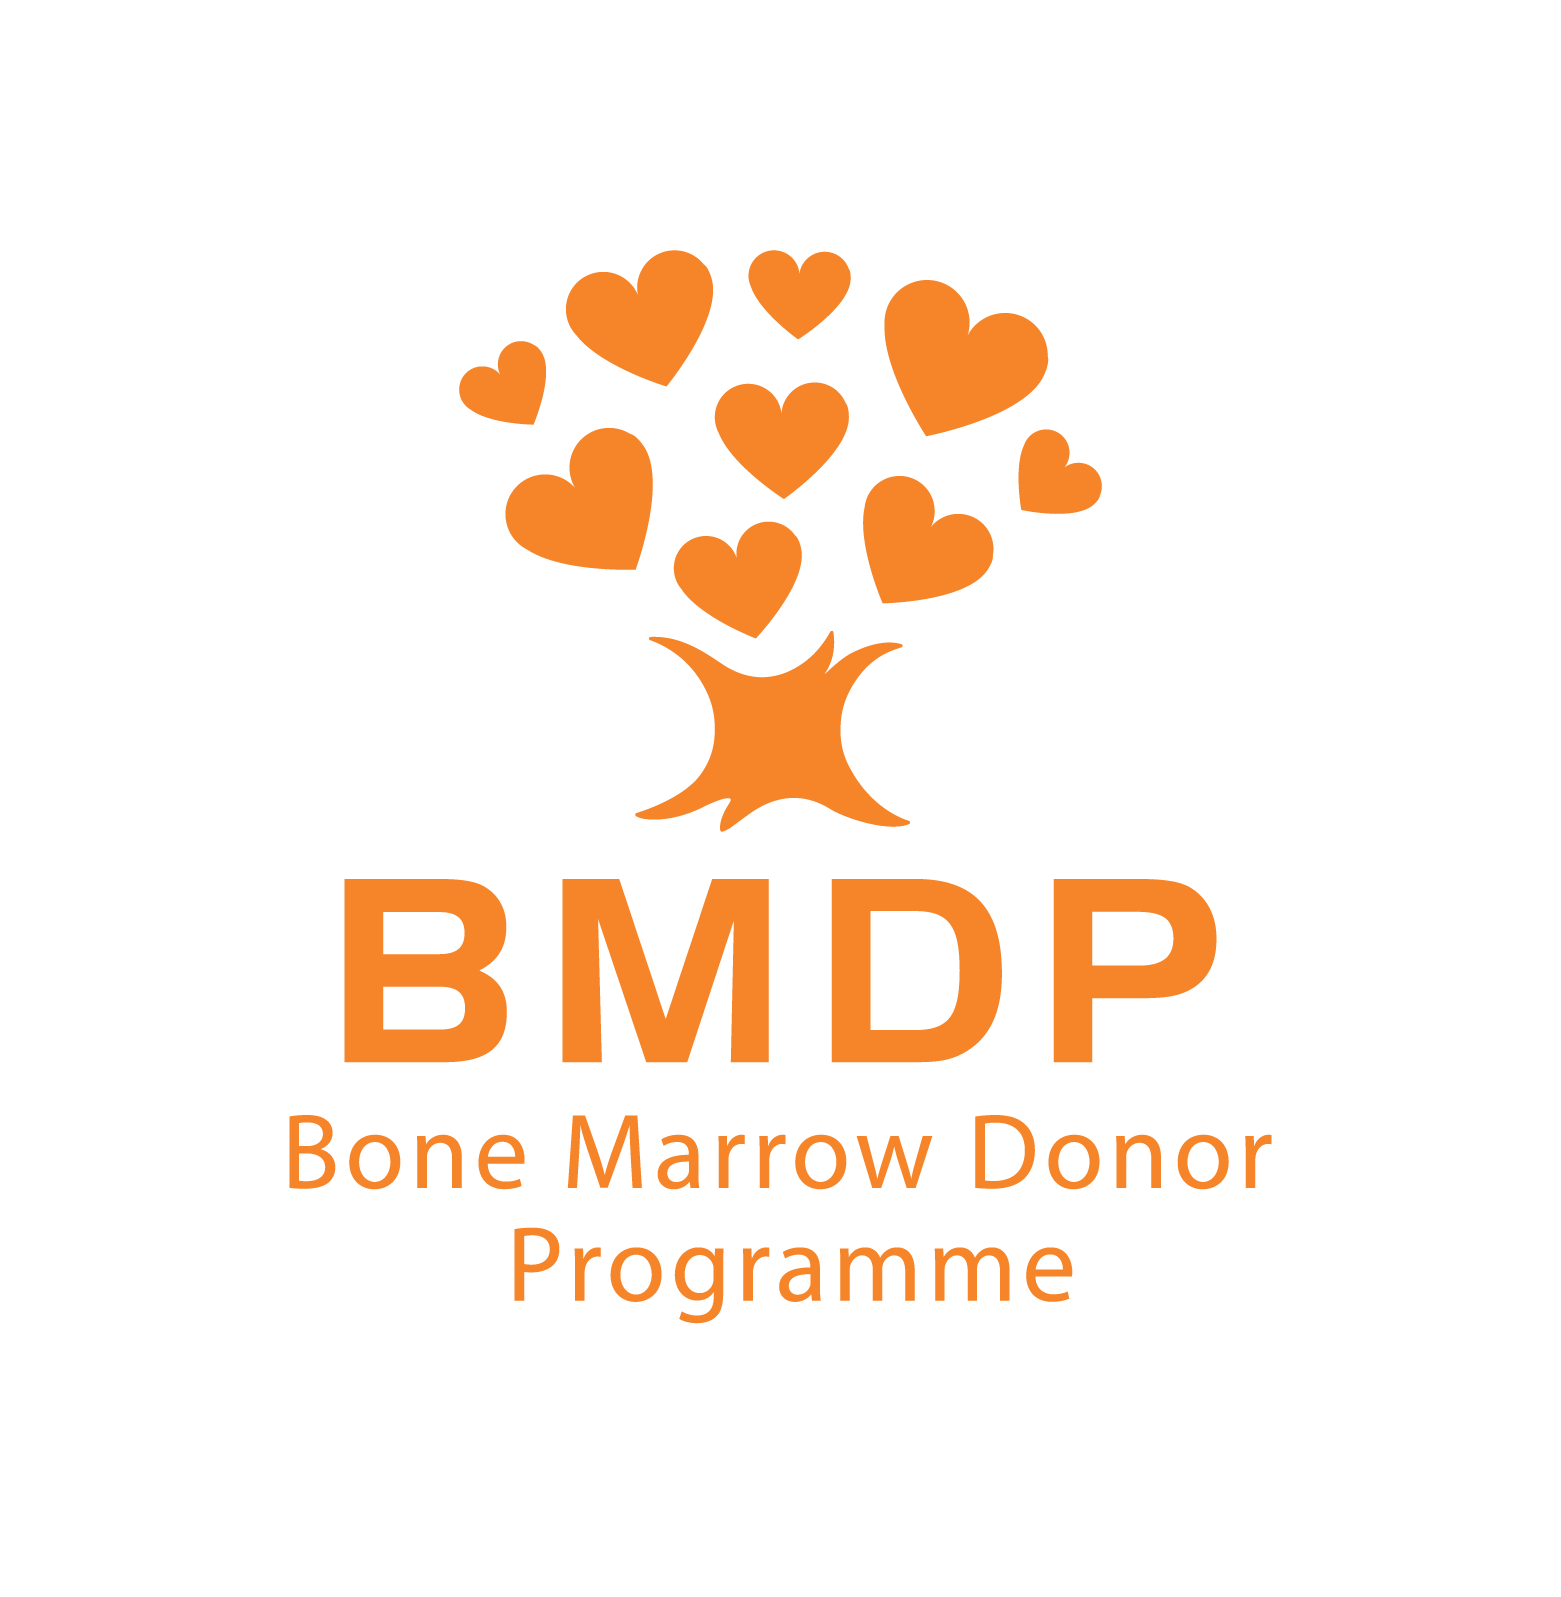 Bone Marrow Donor Programme, The logo